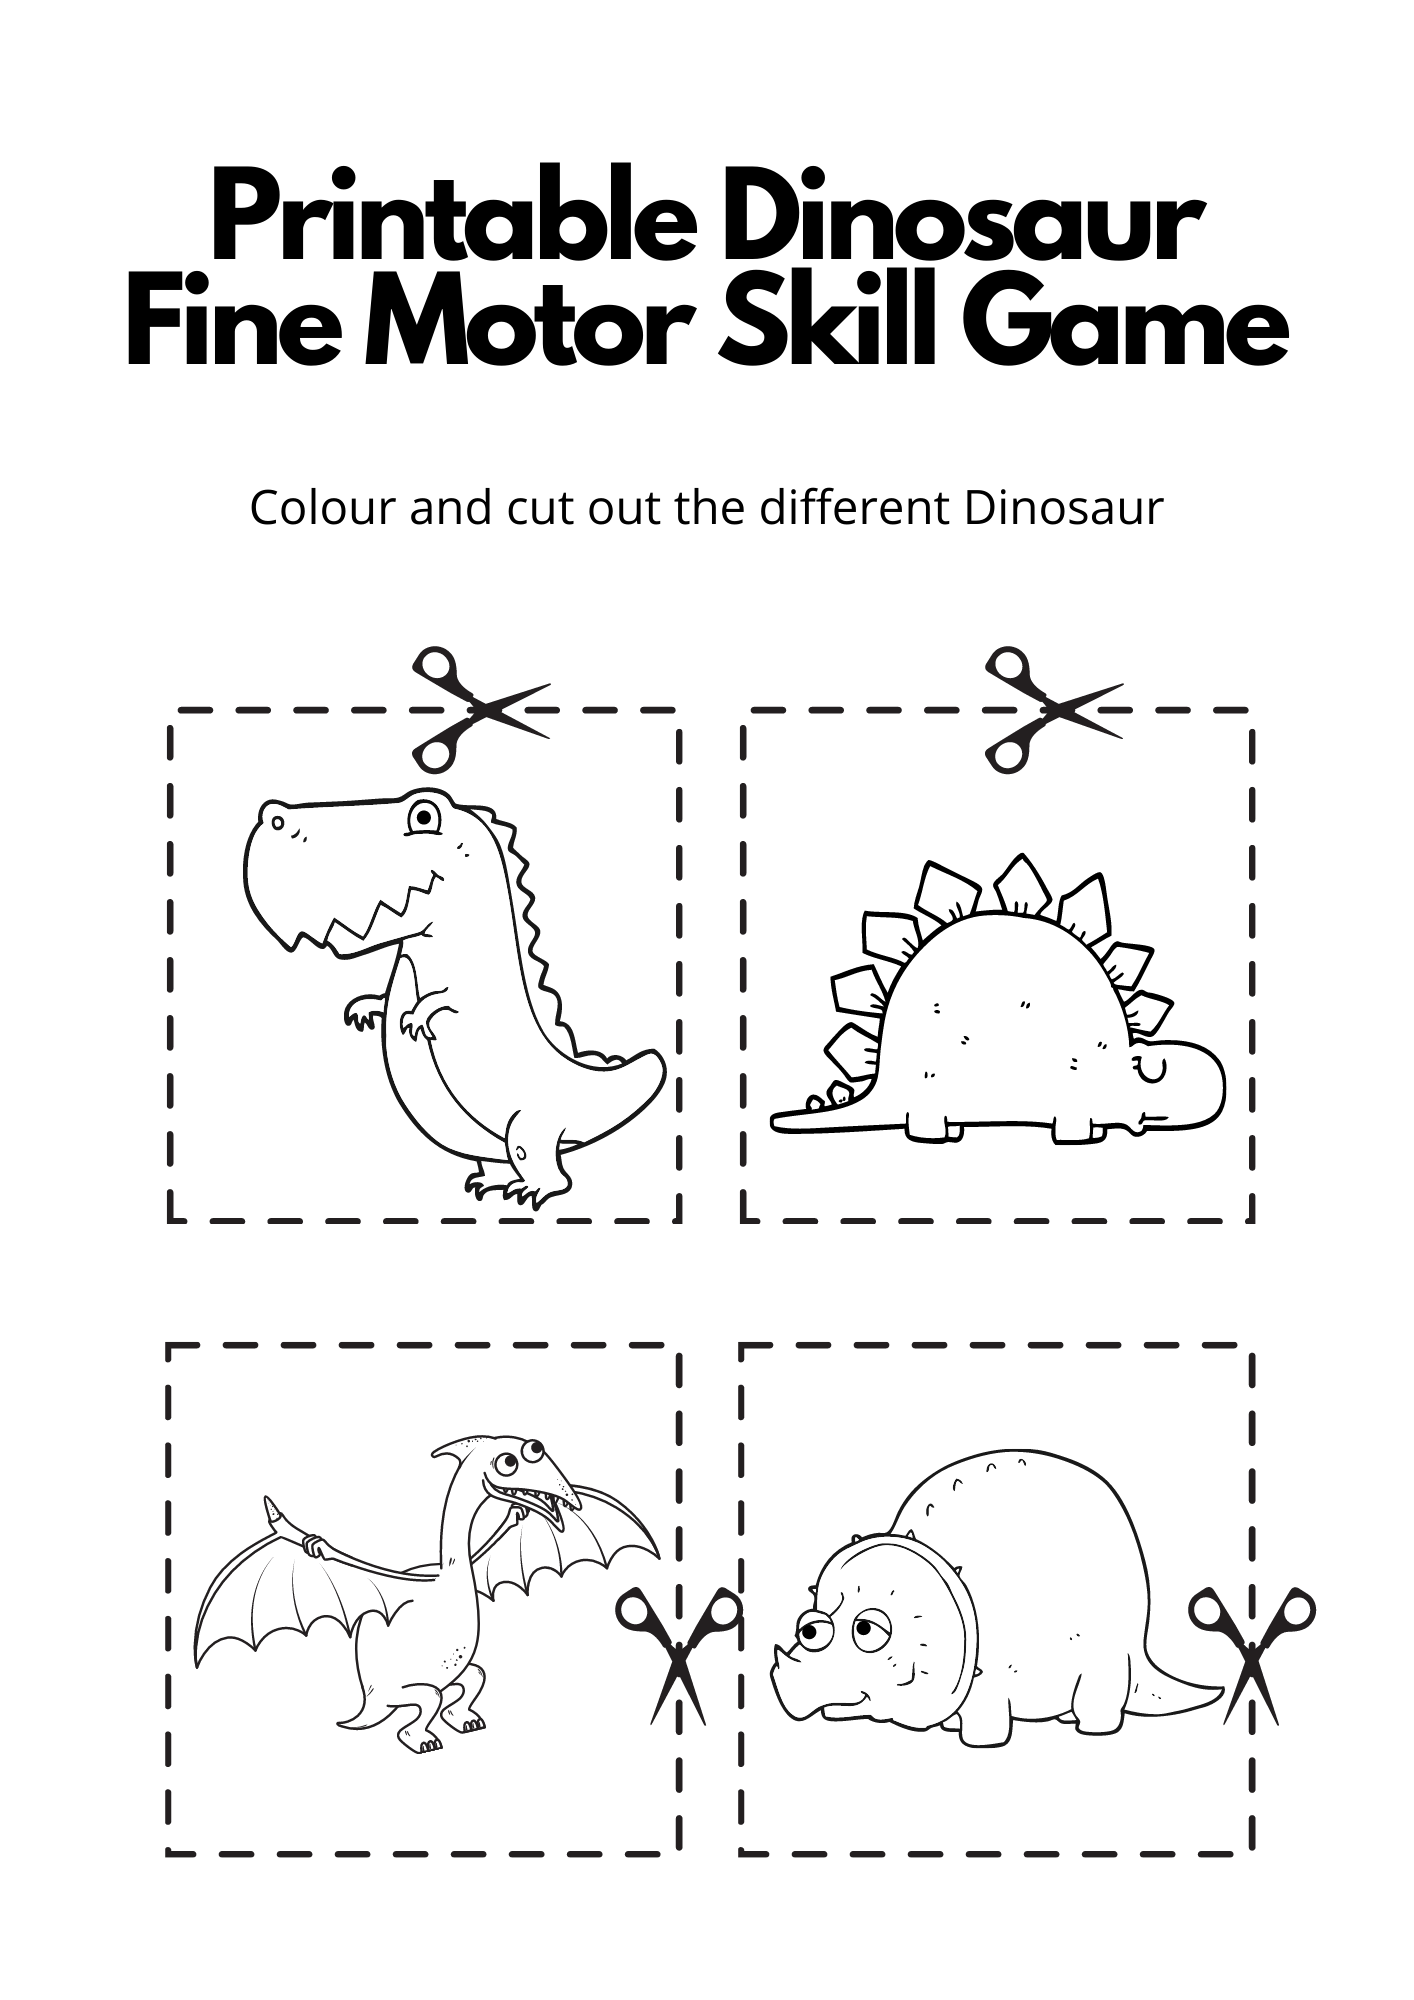 printable-dinosaur-fine-motor-skill-game-free-download-help-my-kids